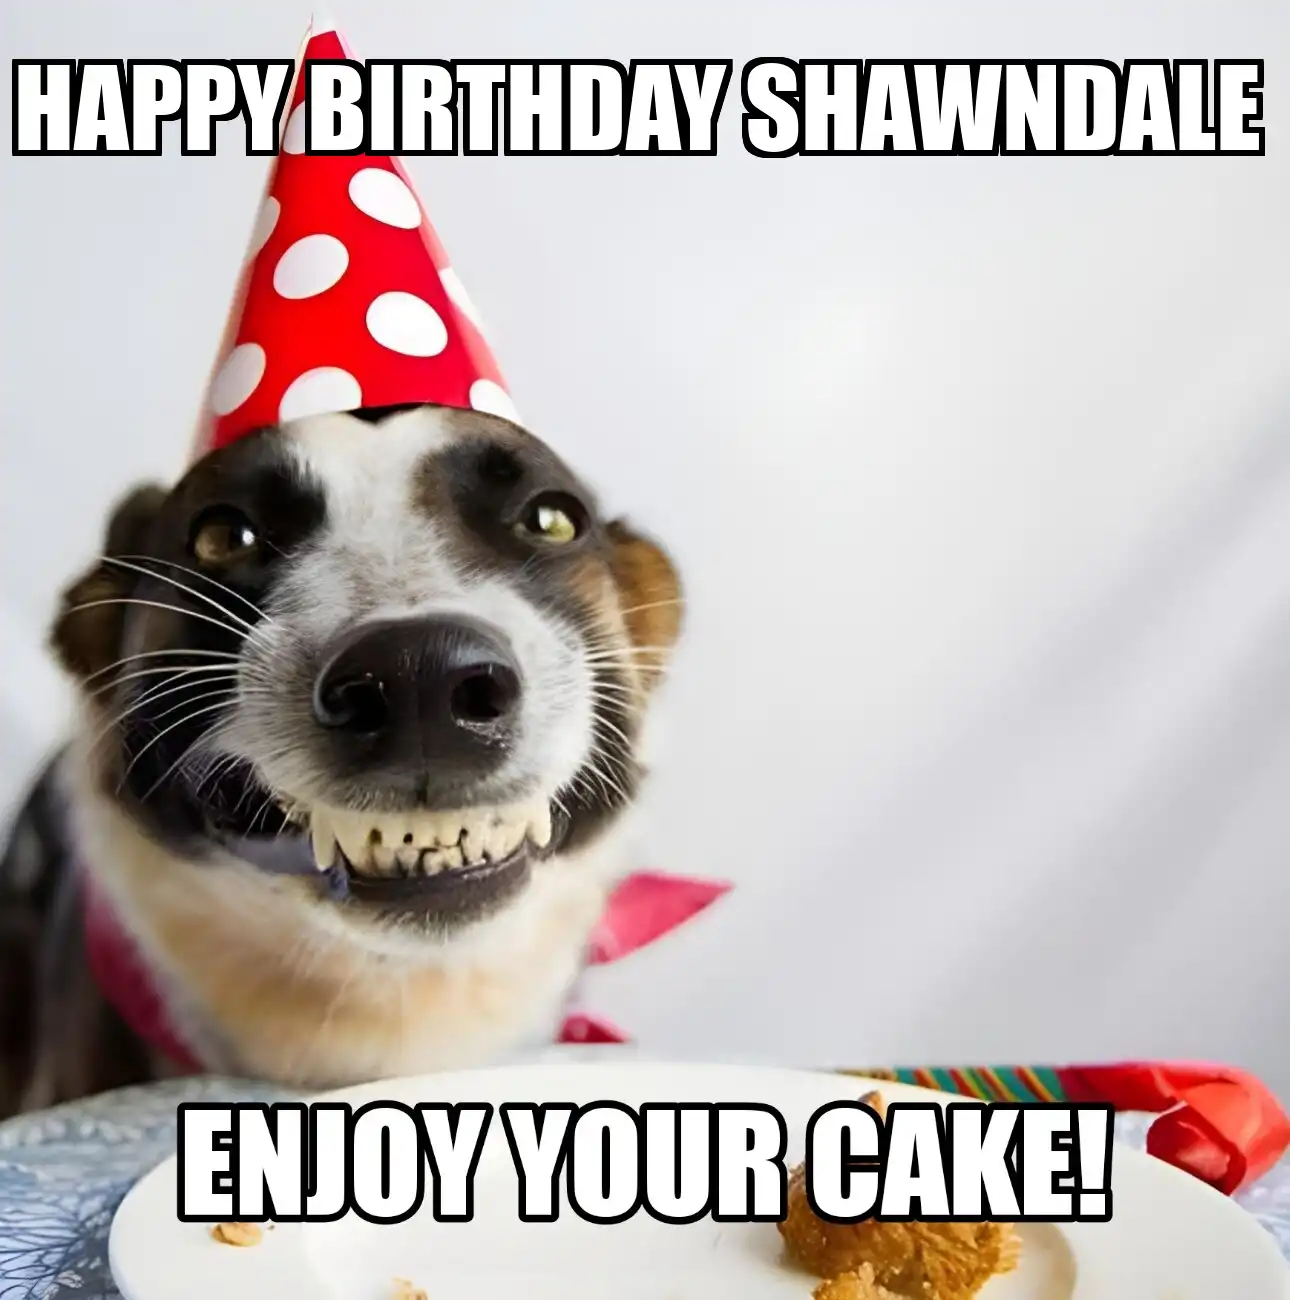 Happy Birthday Shawndale Enjoy Your Cake Dog Meme